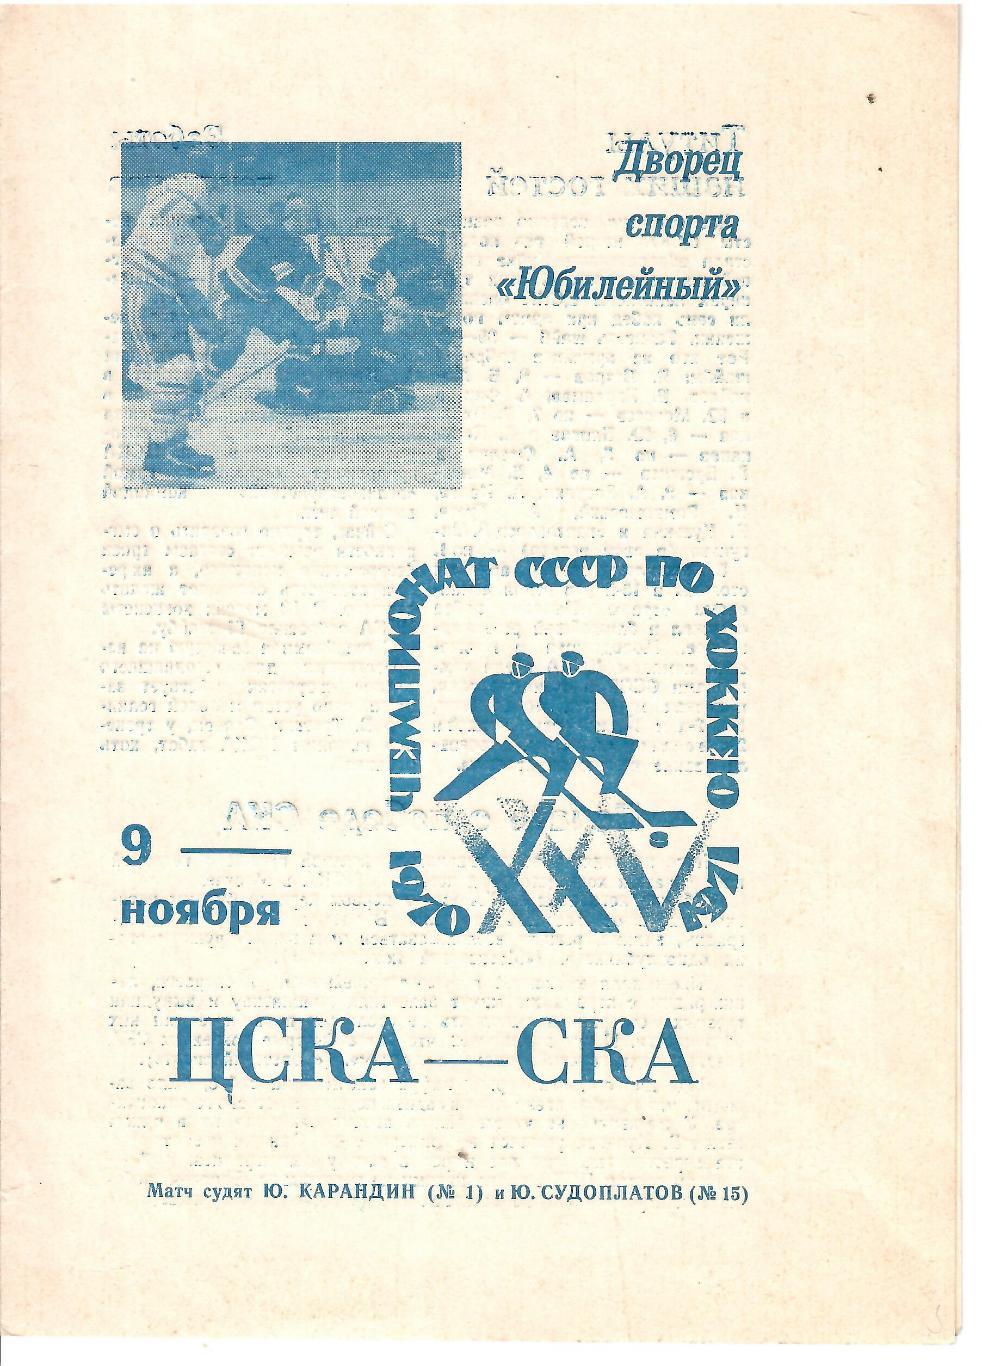 1970 Хоккей СКА Ленинград - ЦСКА (09.11)